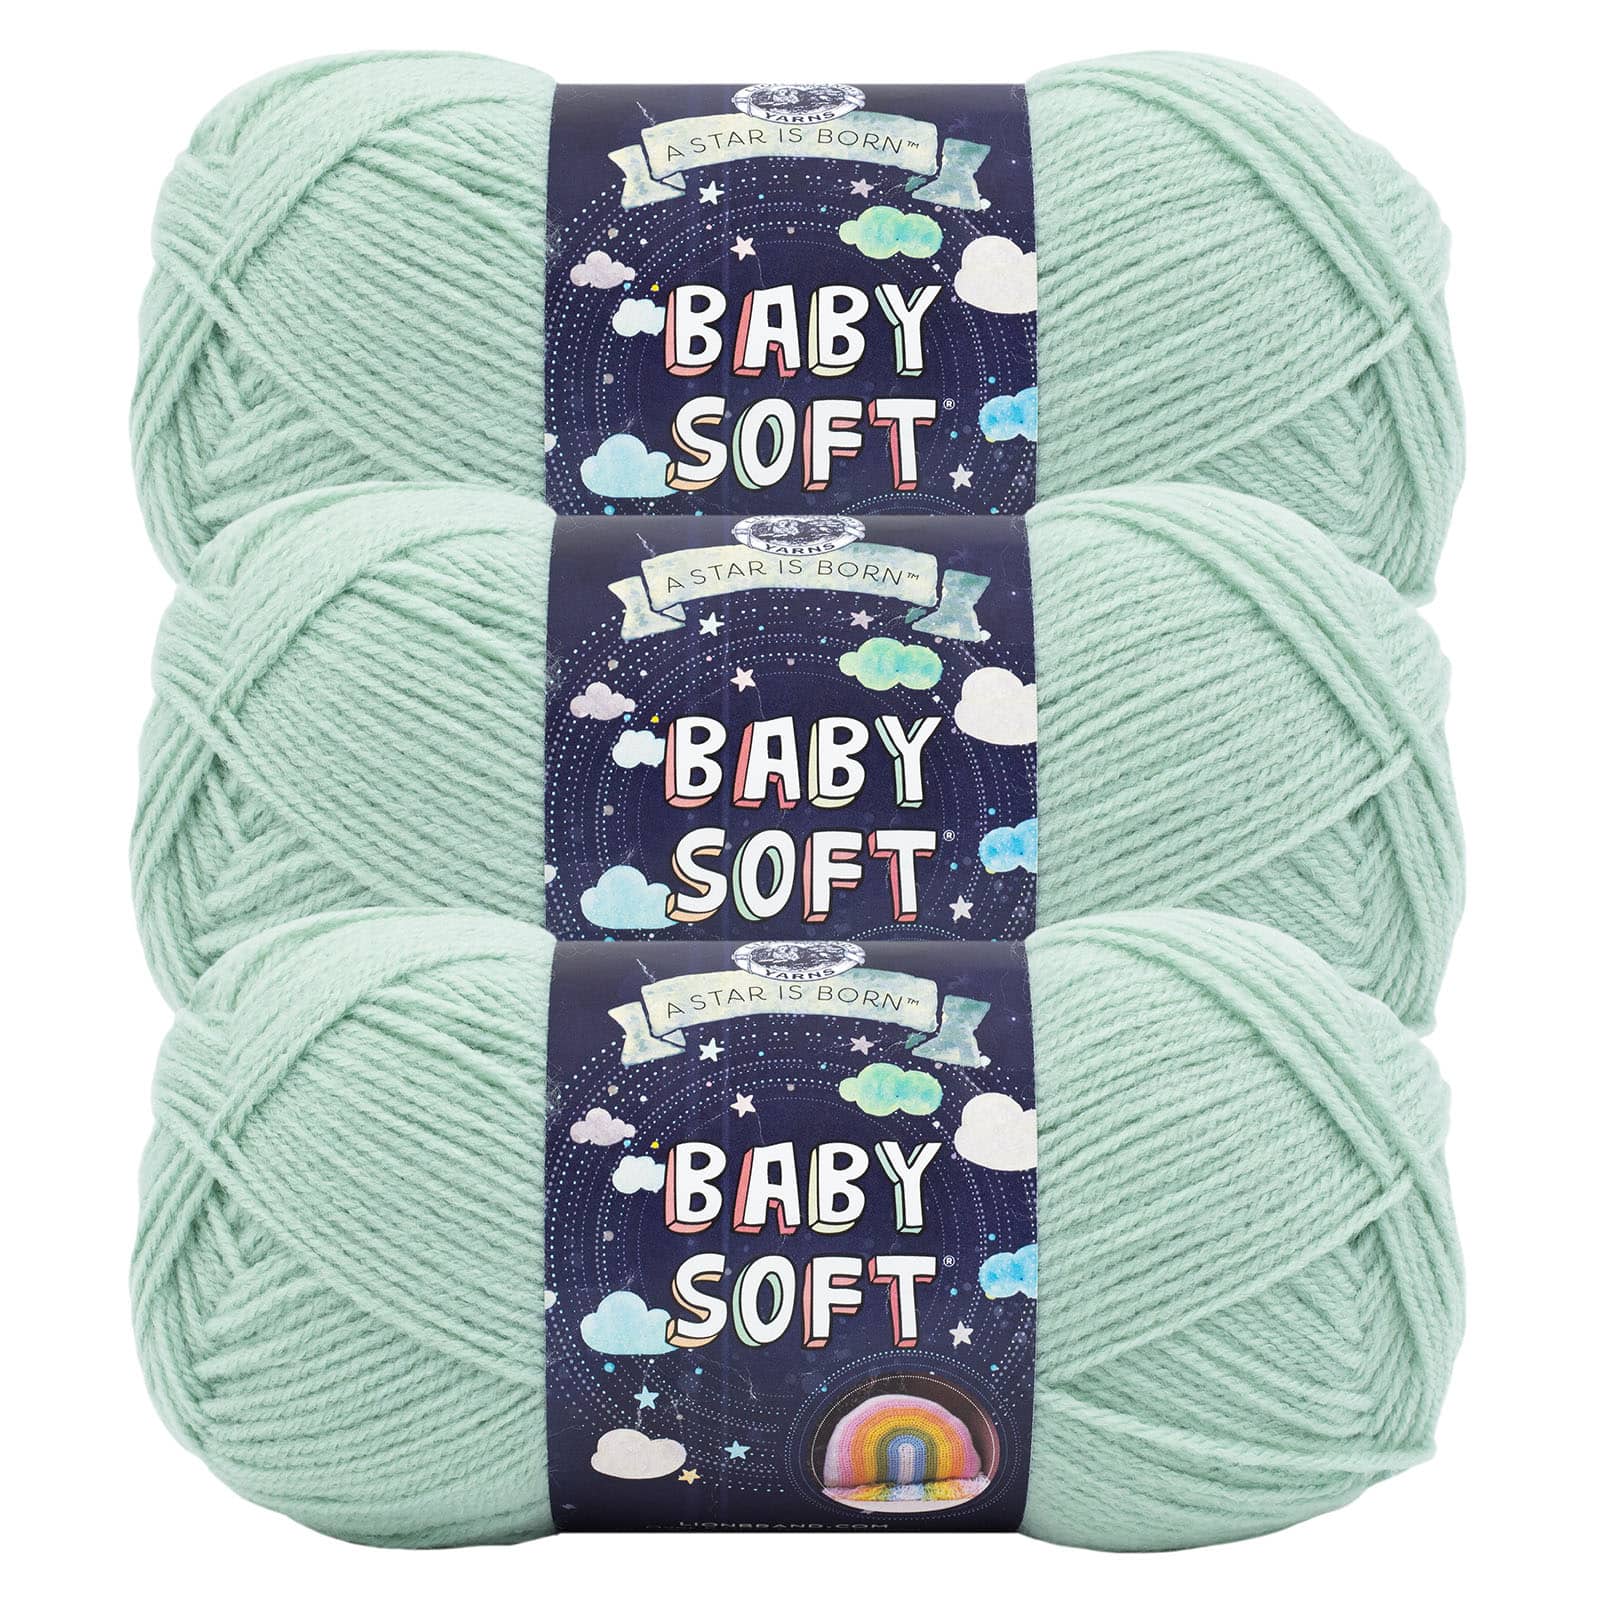 Lion Brand Baby Soft Yarn - Mint 